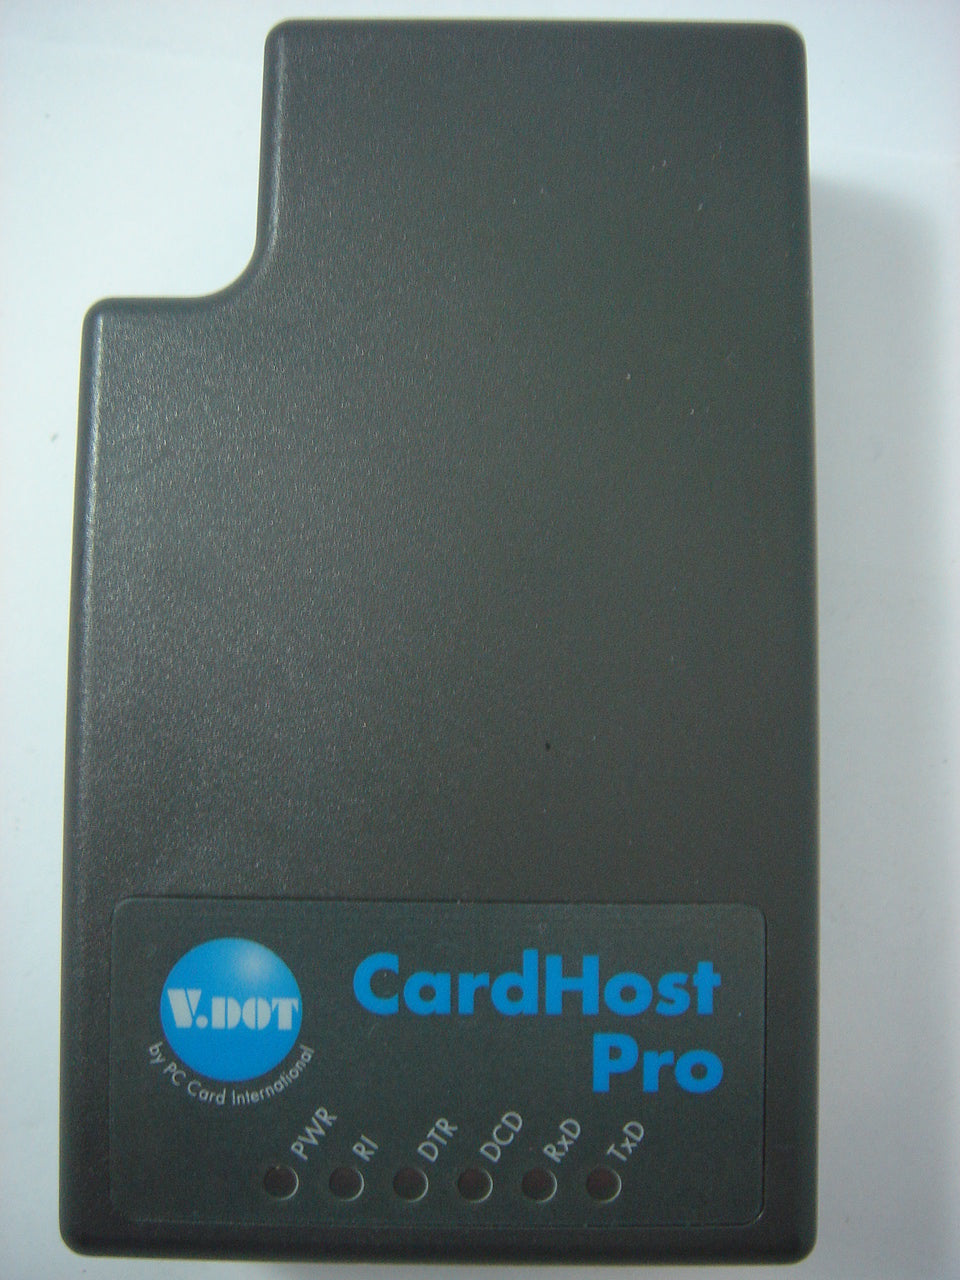 PR02382_9600599-6_V.DOT CardHost Pro external PCMCIA Carrier/Adapter - Image2